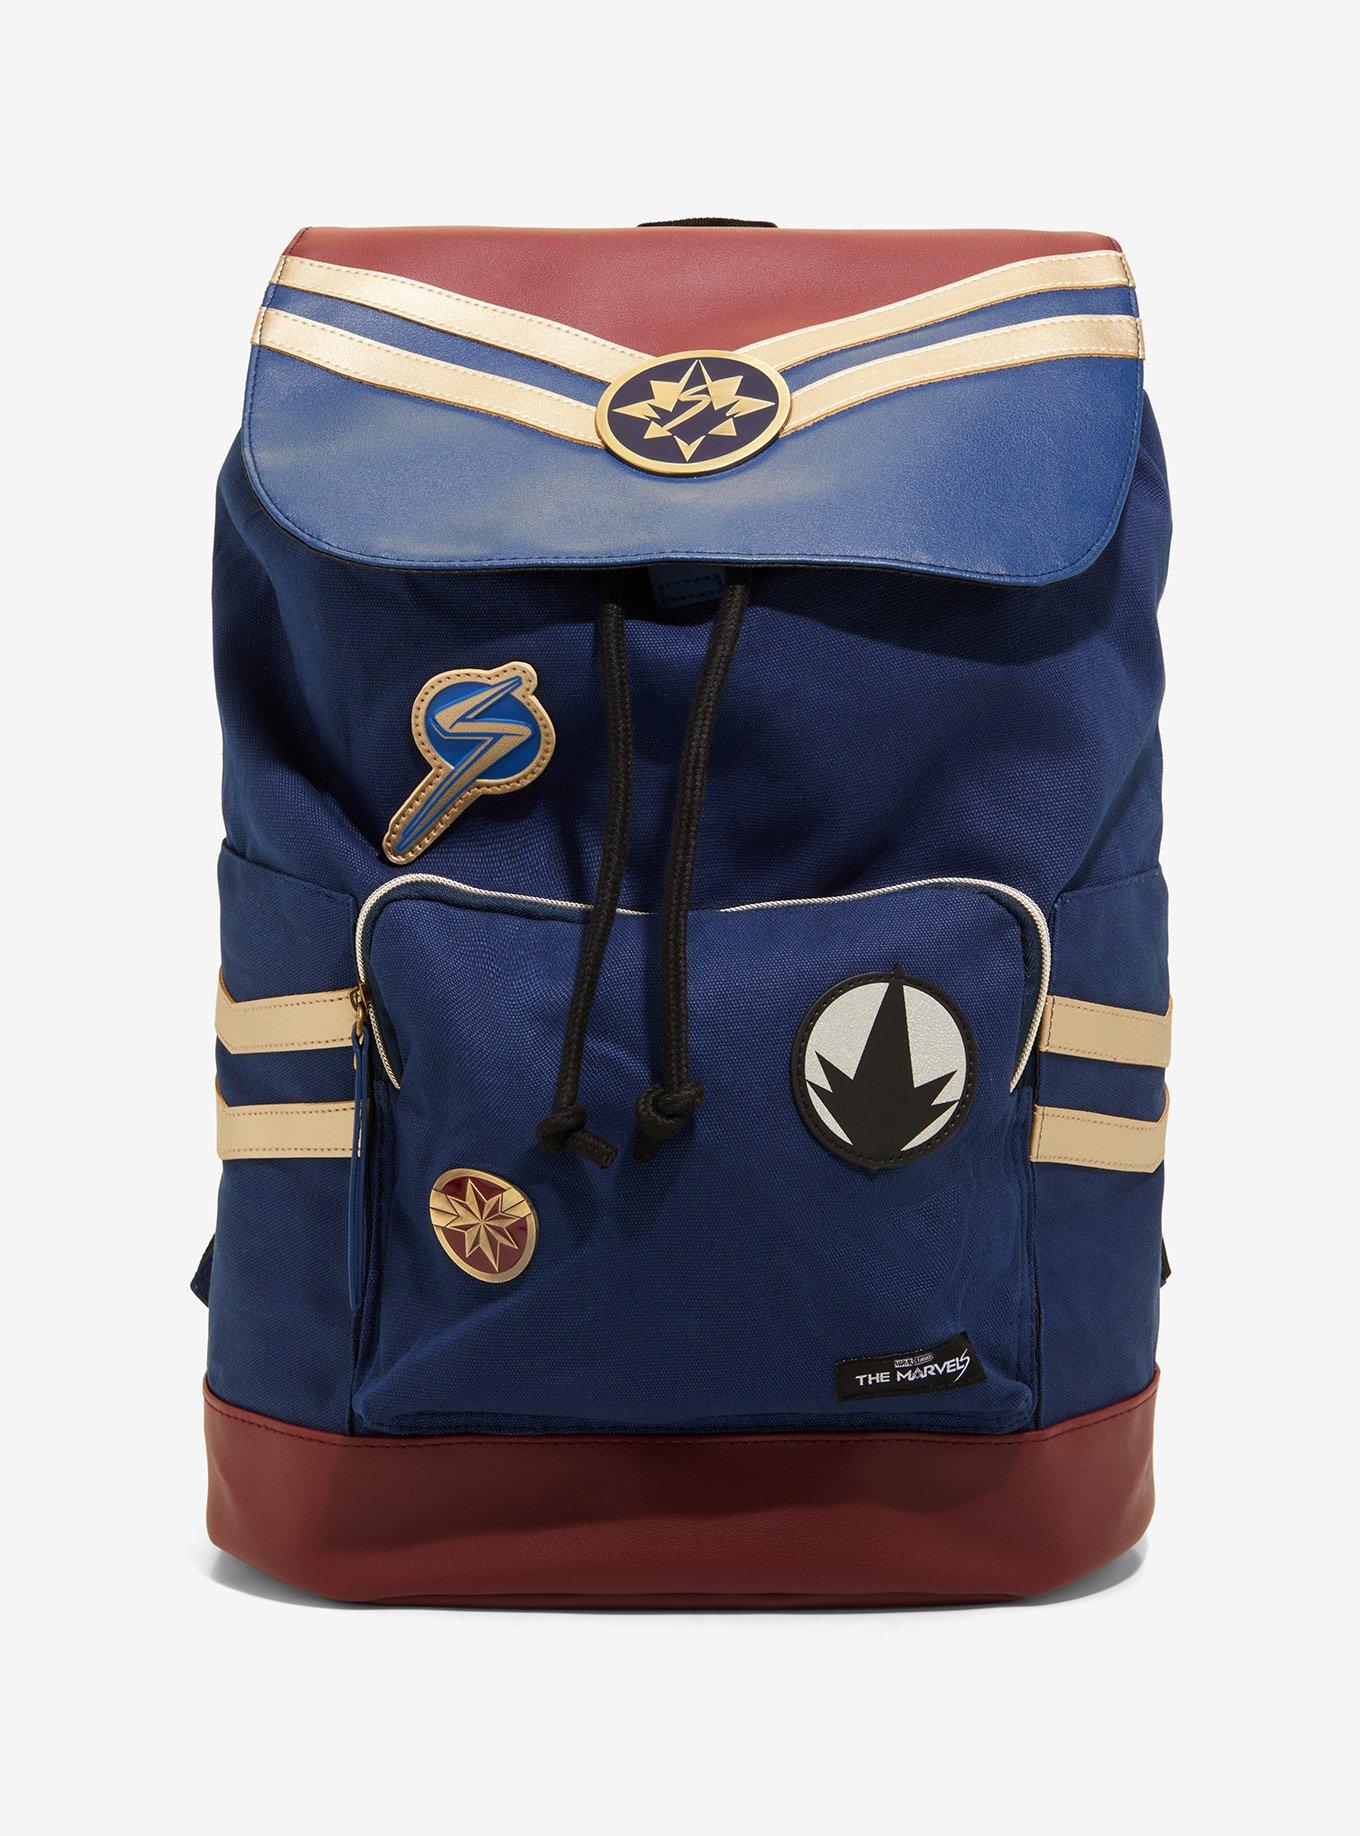 Da Boom Luminous School Backpack Cool Boys School Backpack Music Boy Backpacks Gray, Men's, Size: One Size